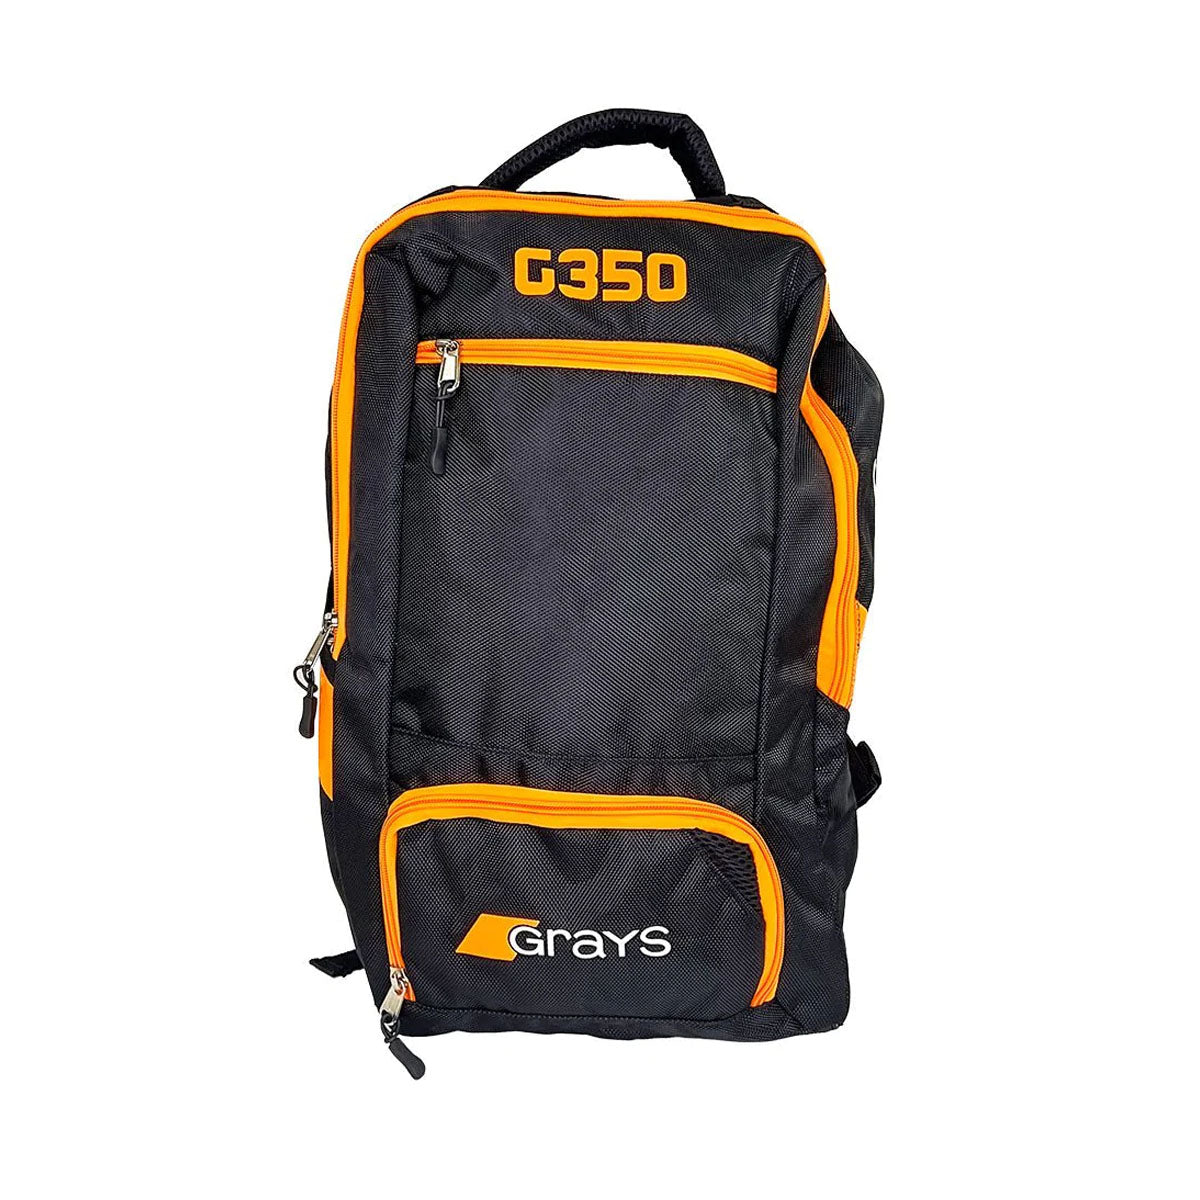 G 350 Duffle Bag